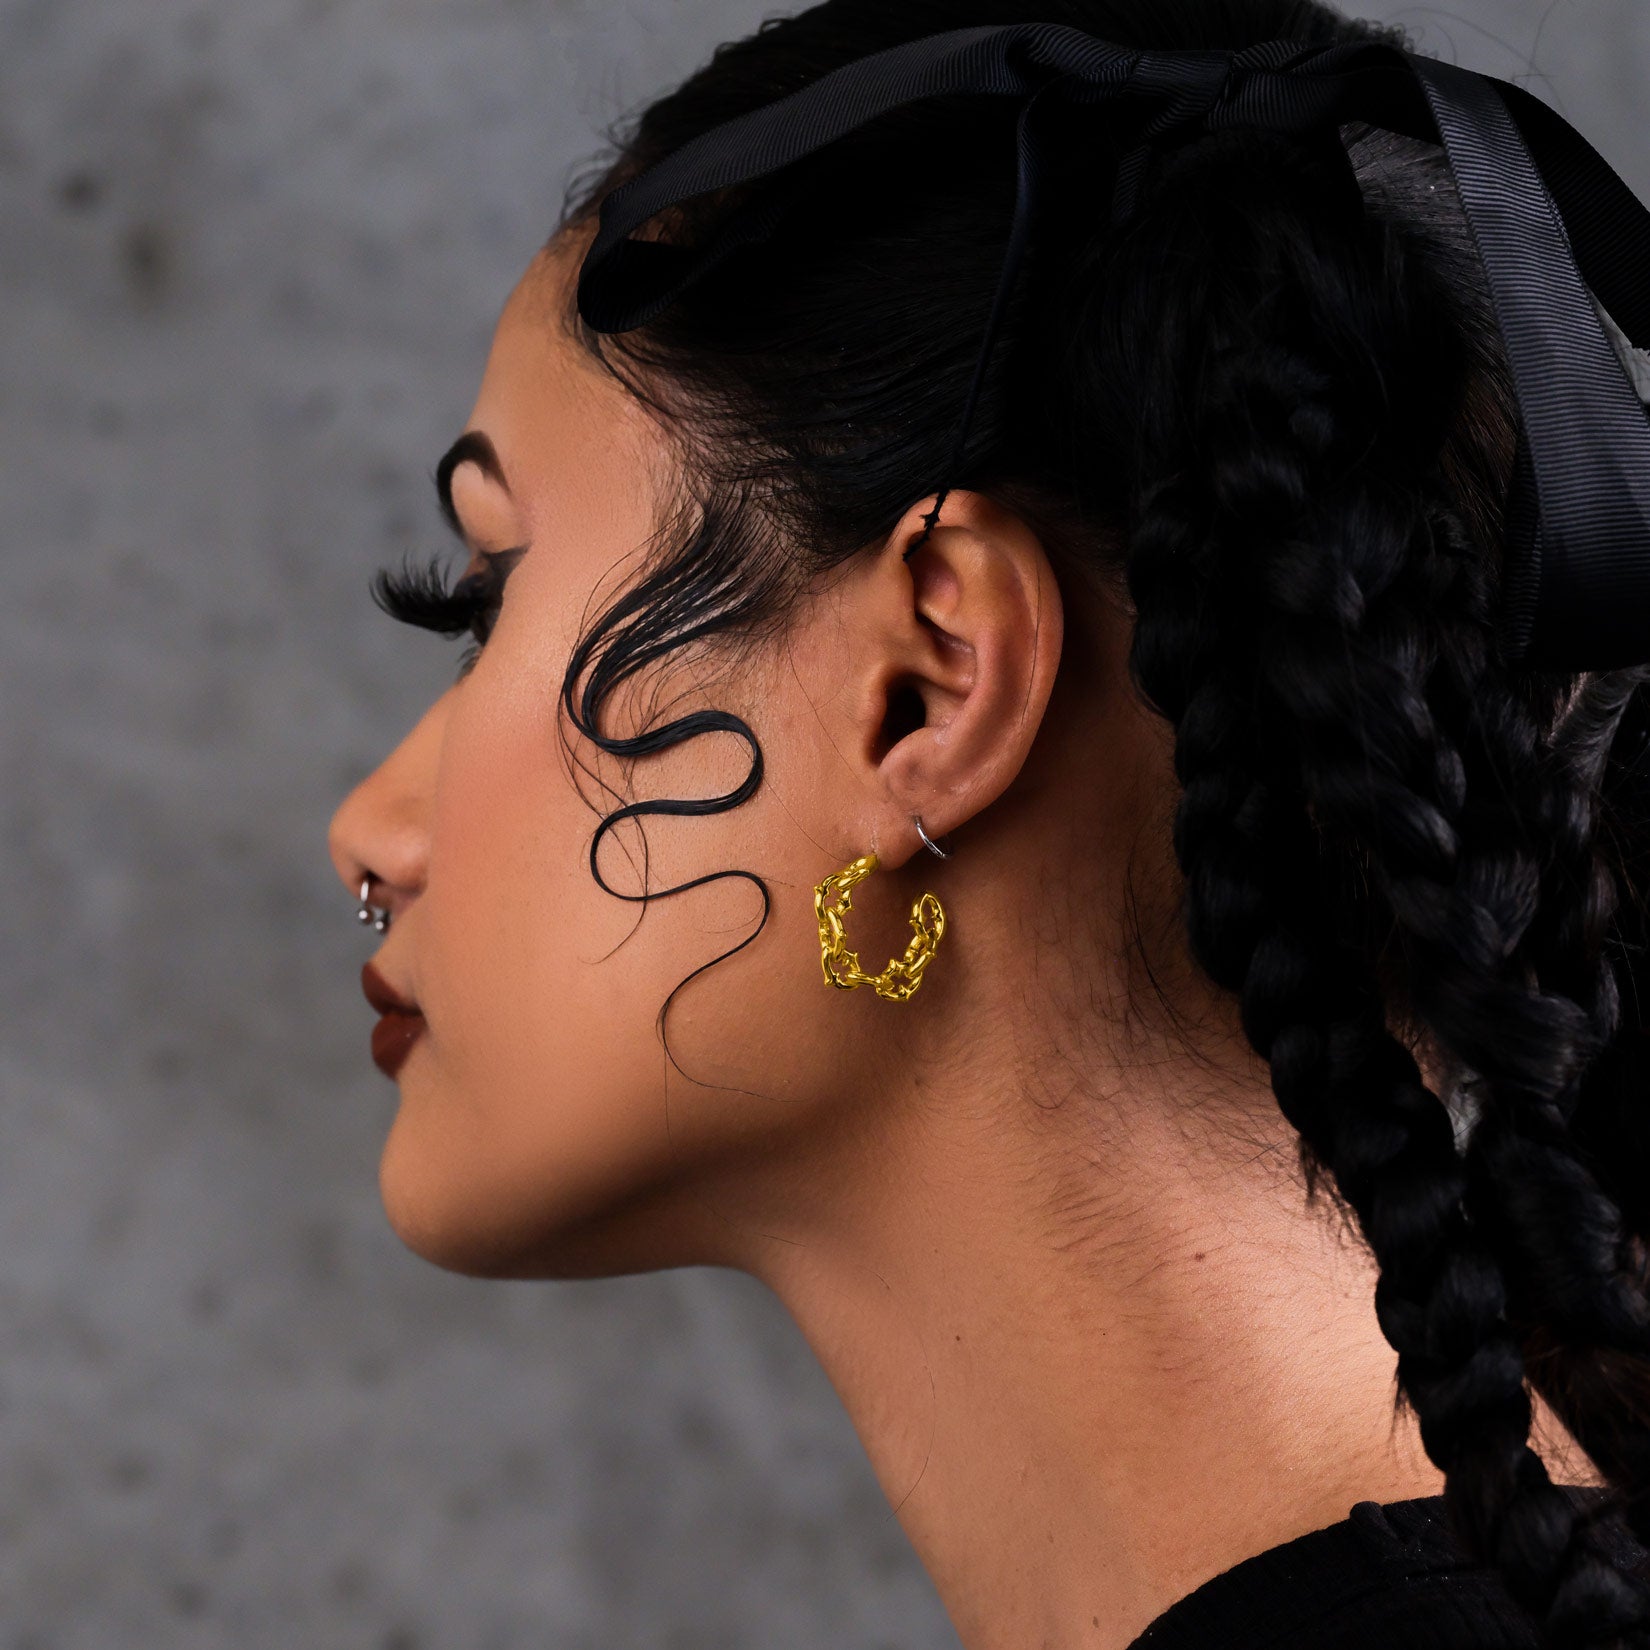 Women's gold punk hoop earrings with spikes